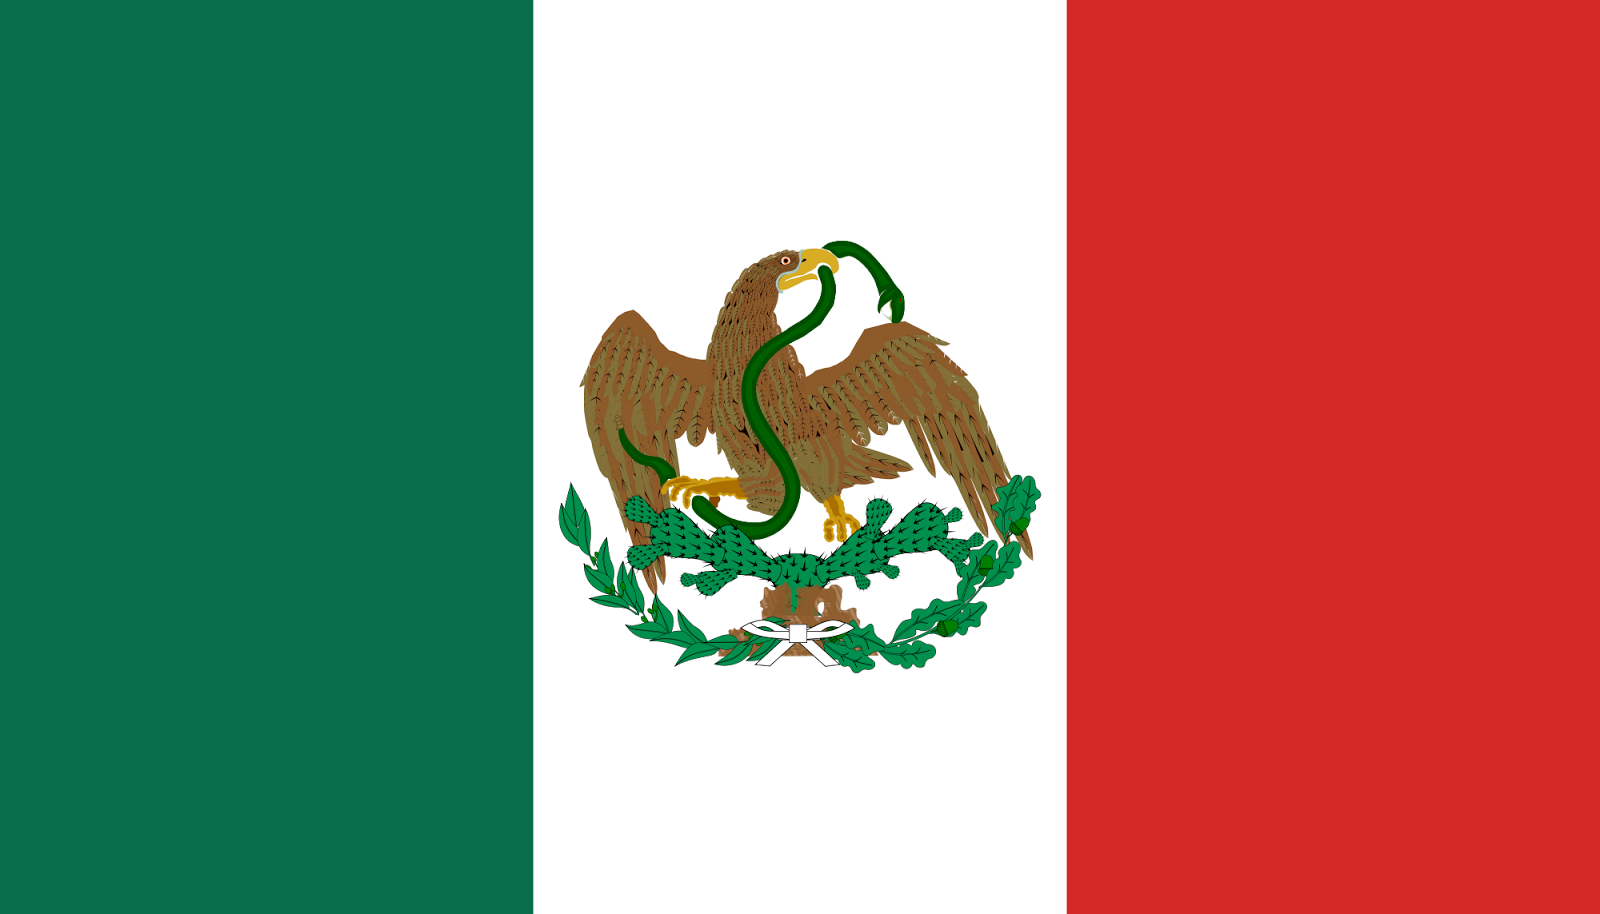 MEXICO #3, GRACIAS